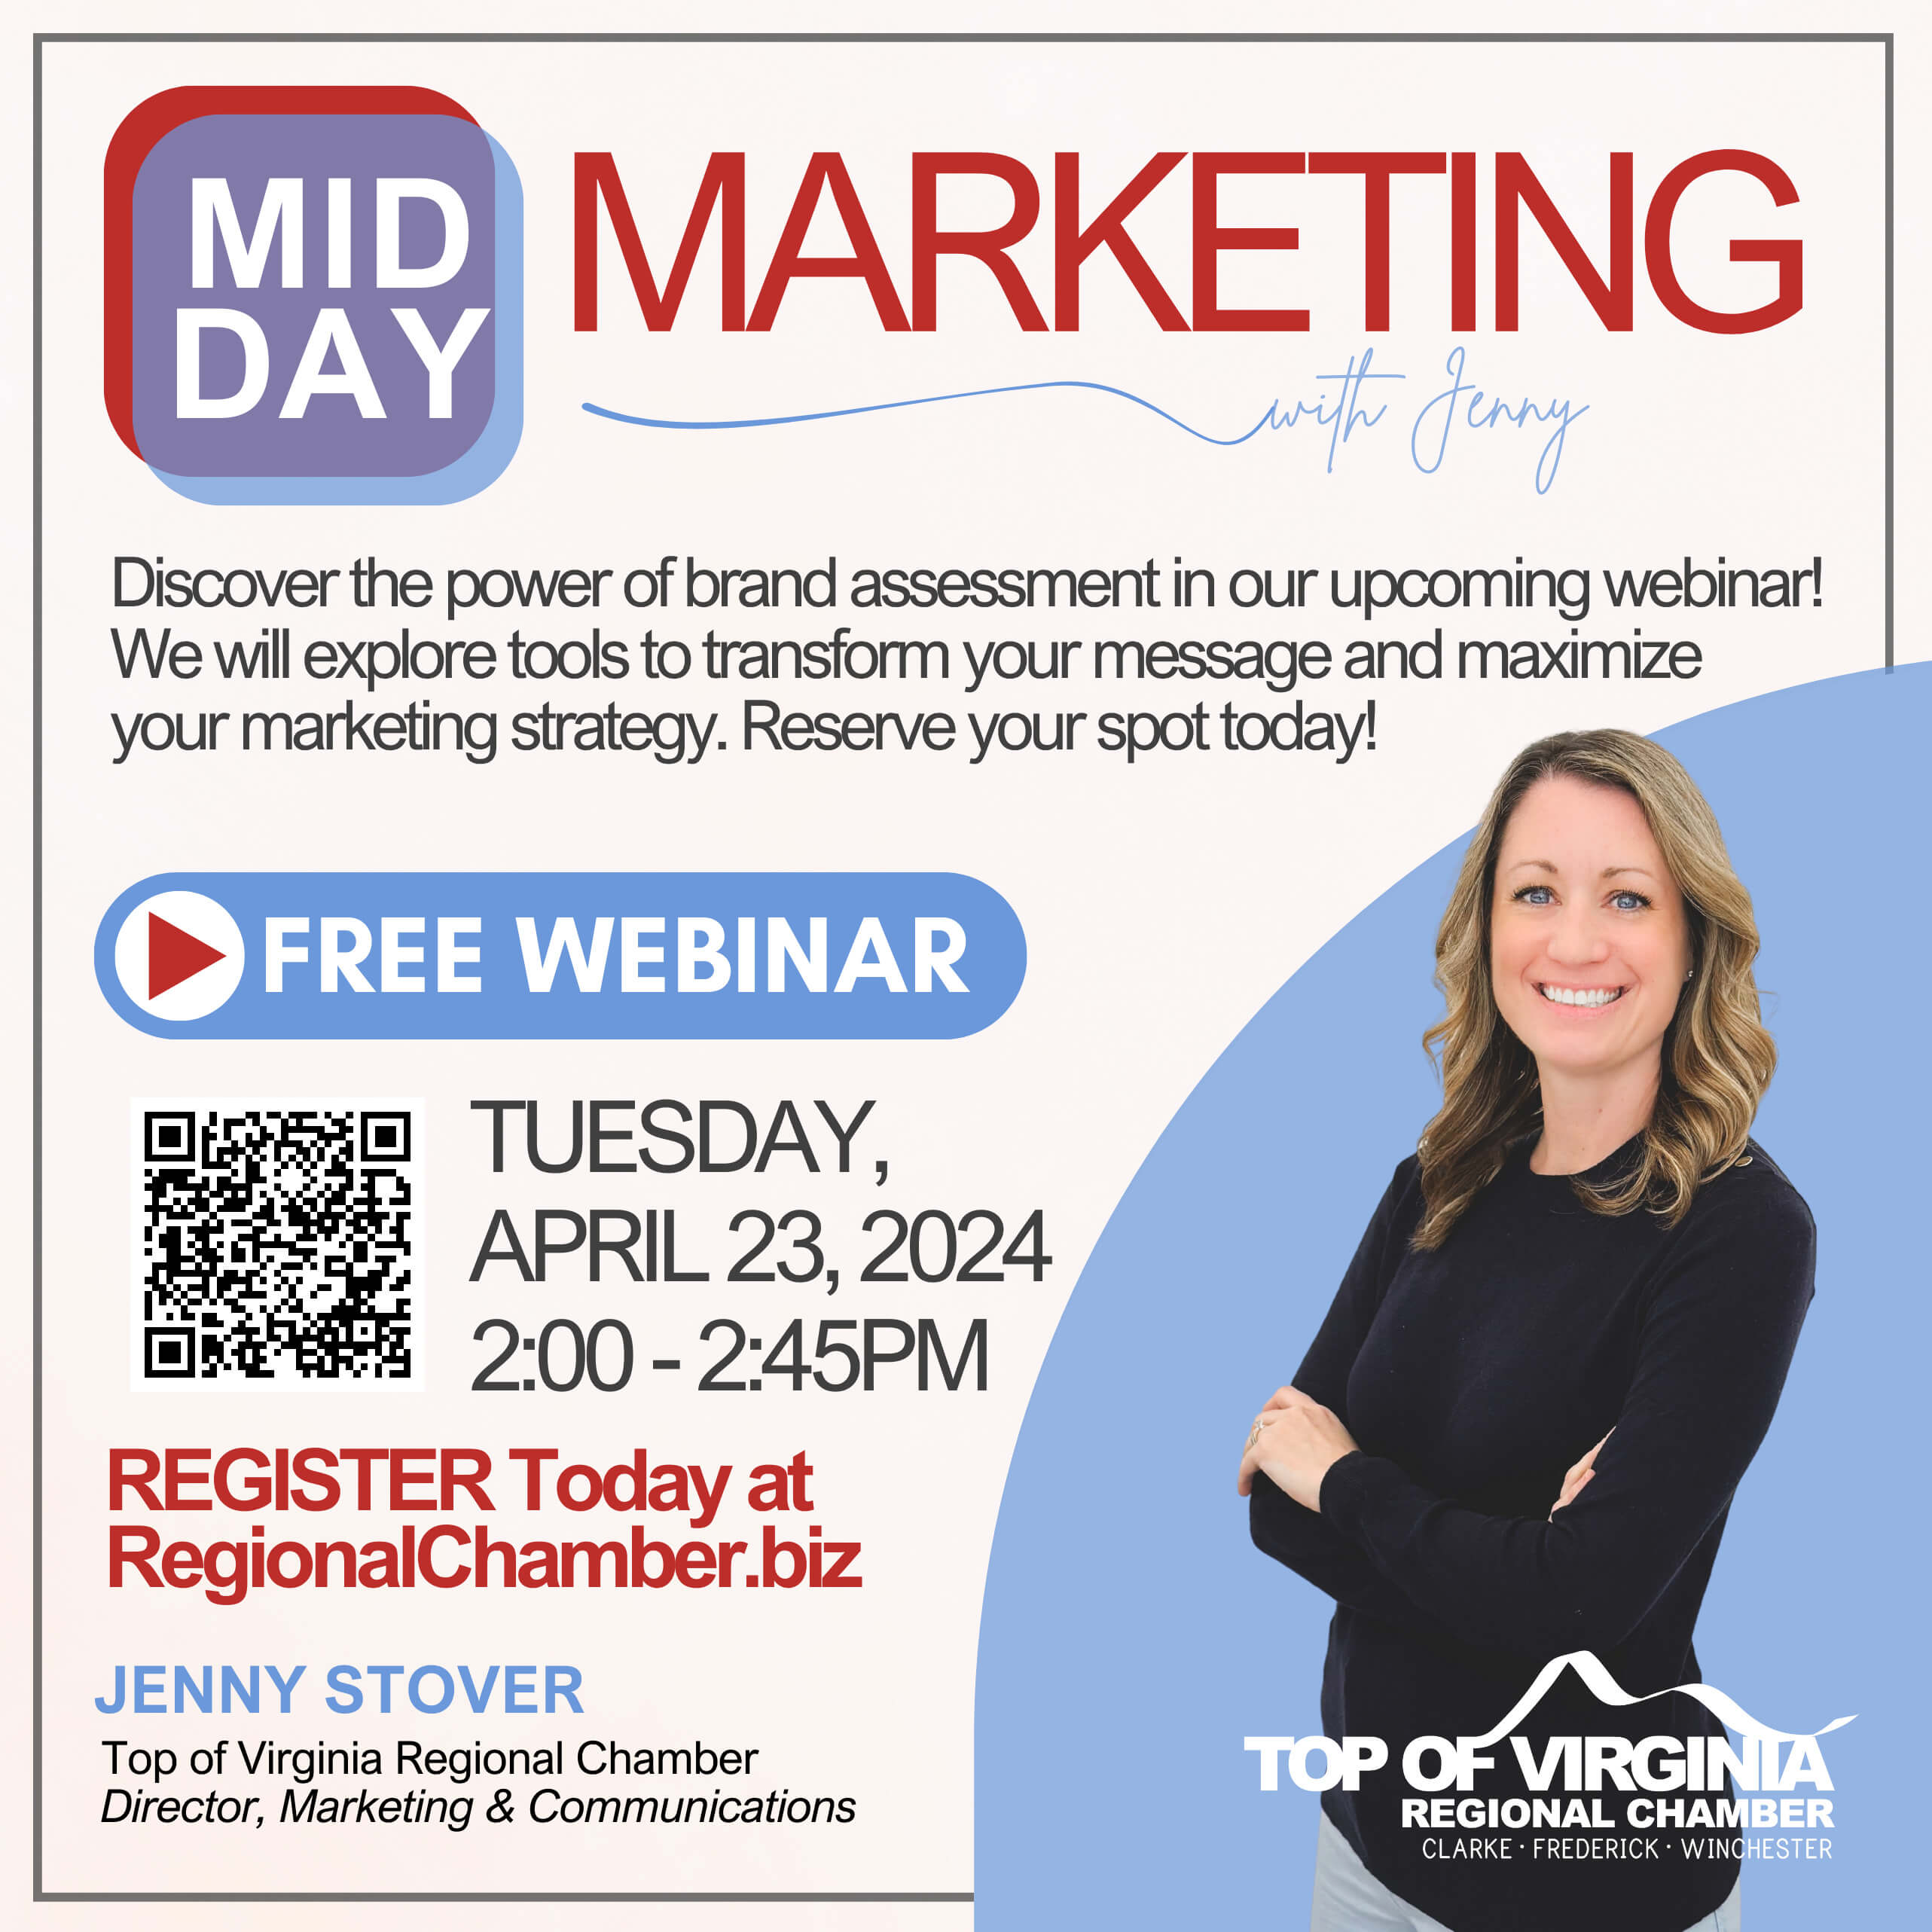 Copy of MidDay Marketing Promo April 2024 (3)